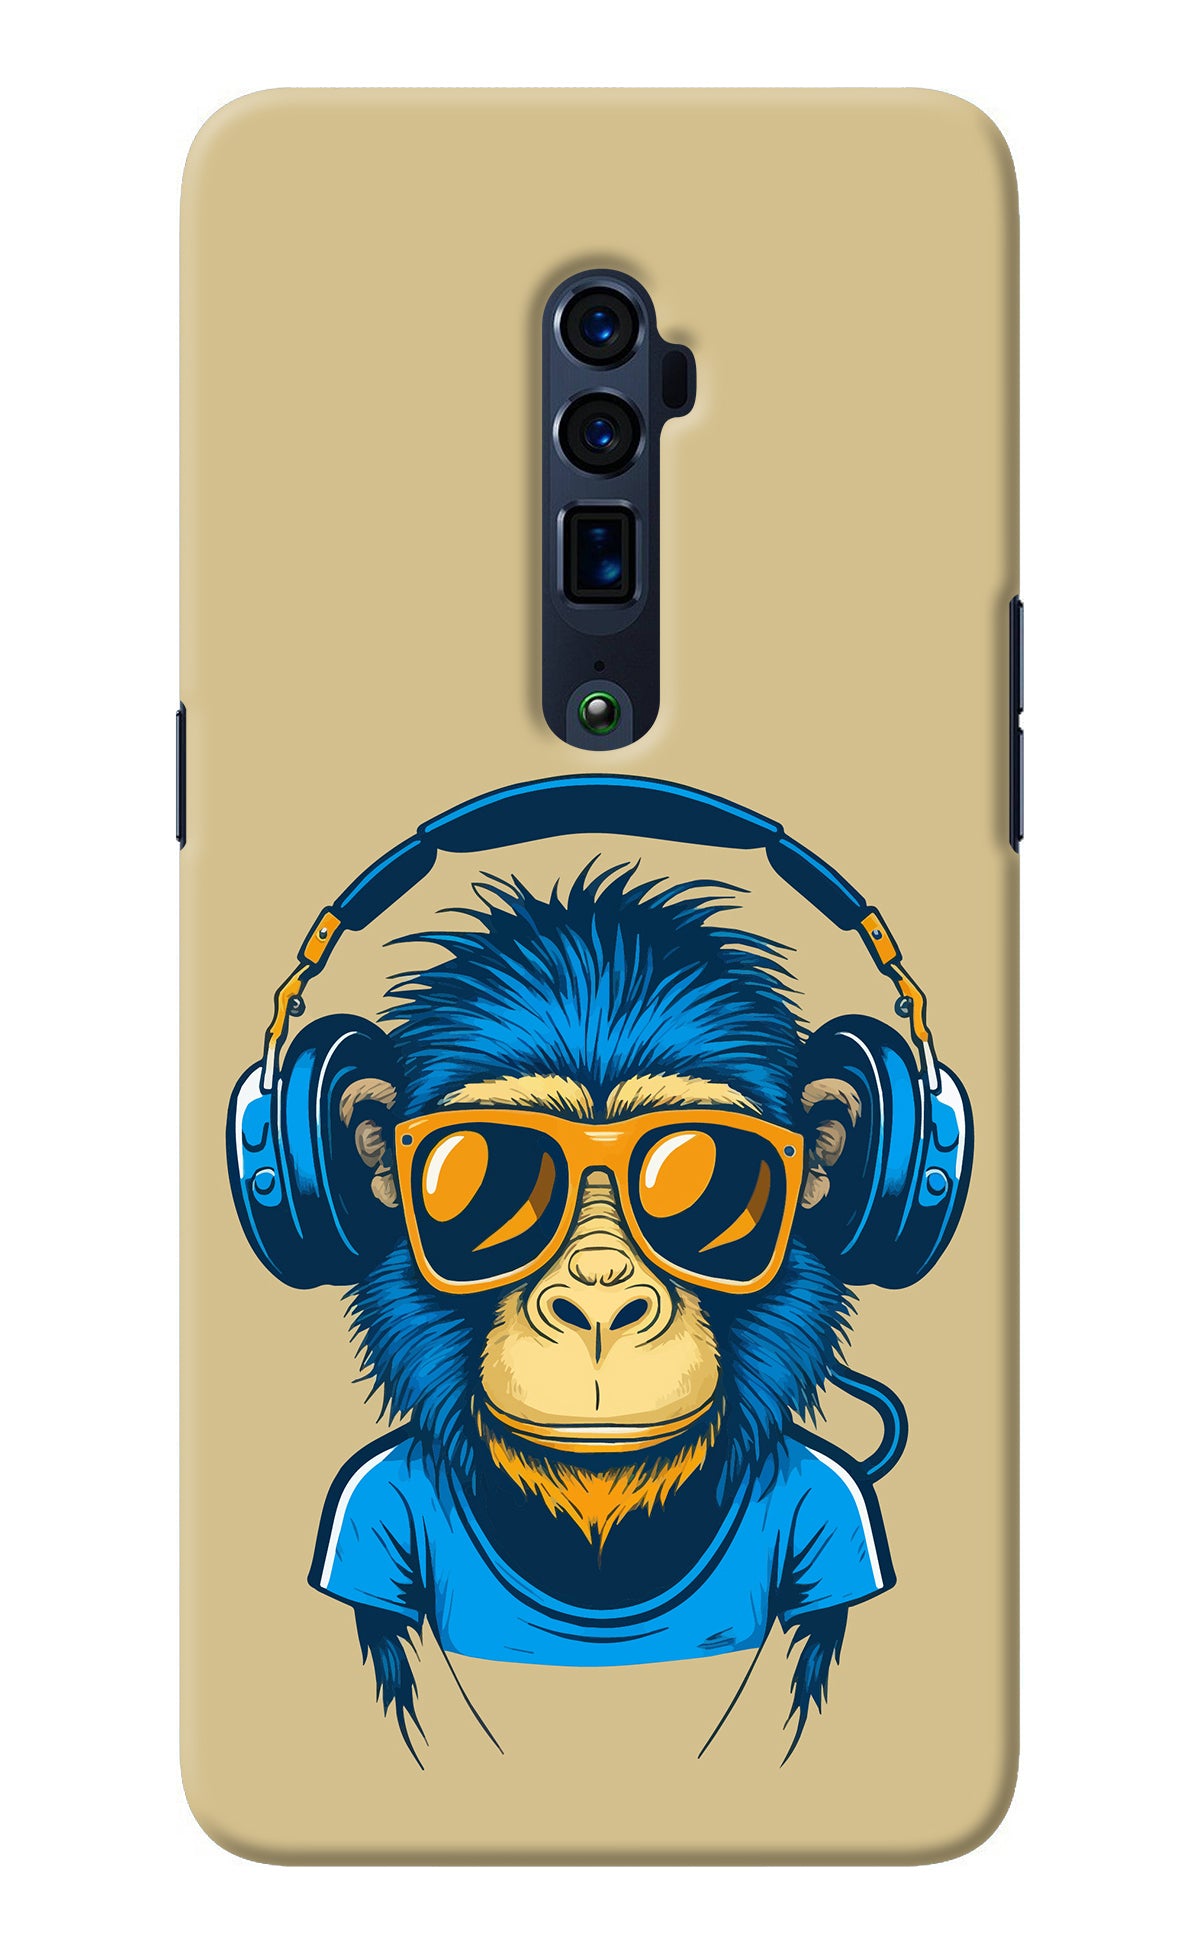 Monkey Headphone Oppo Reno 10x Zoom Back Cover